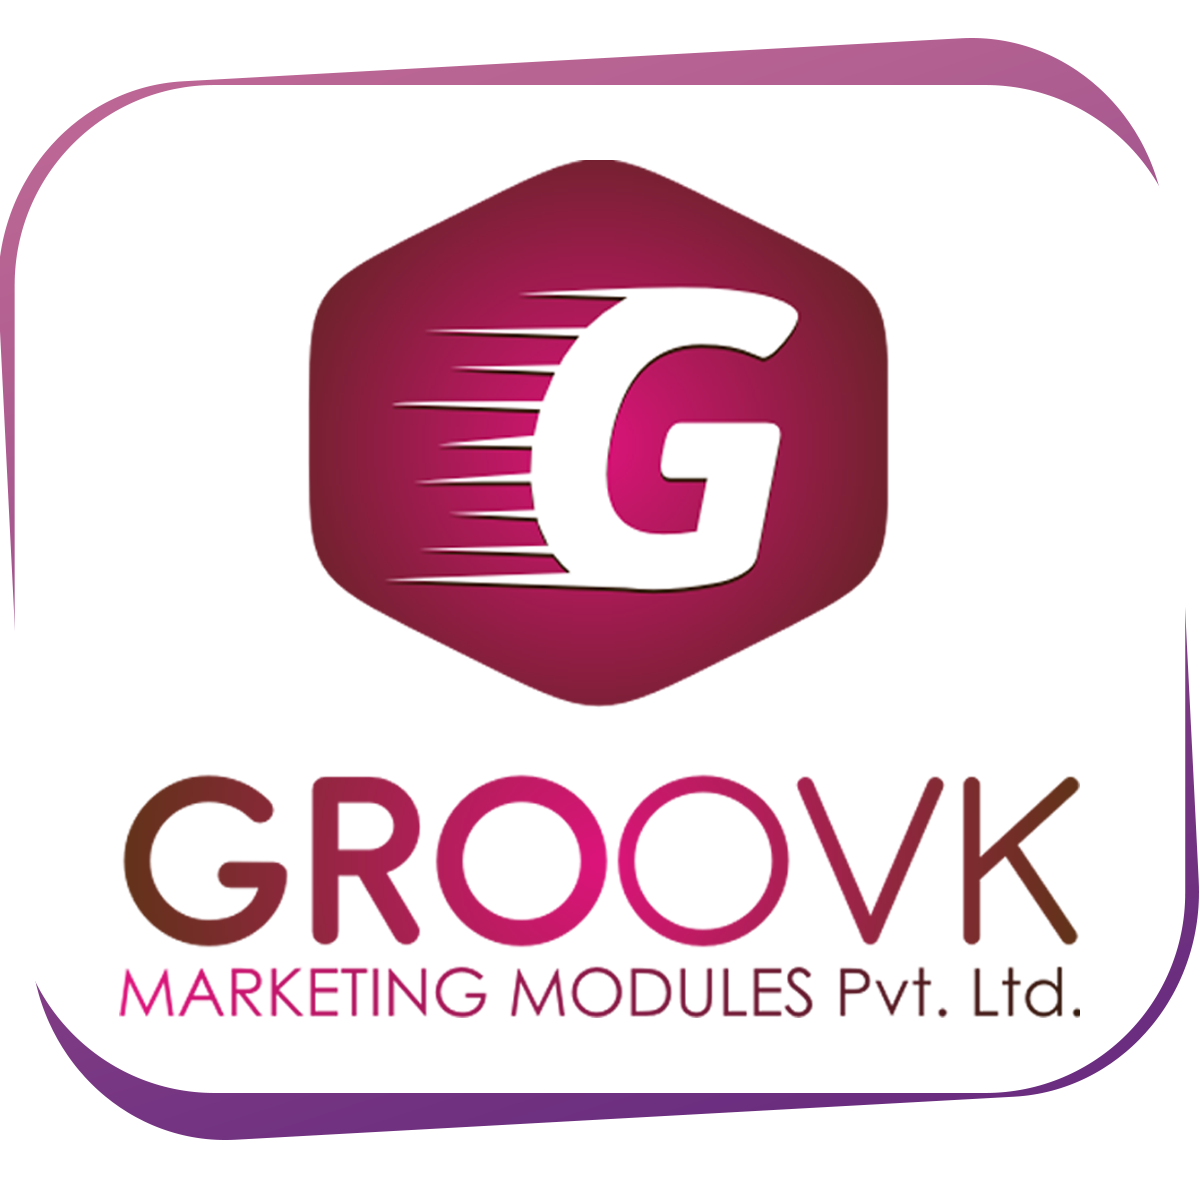 Groovk Marketing